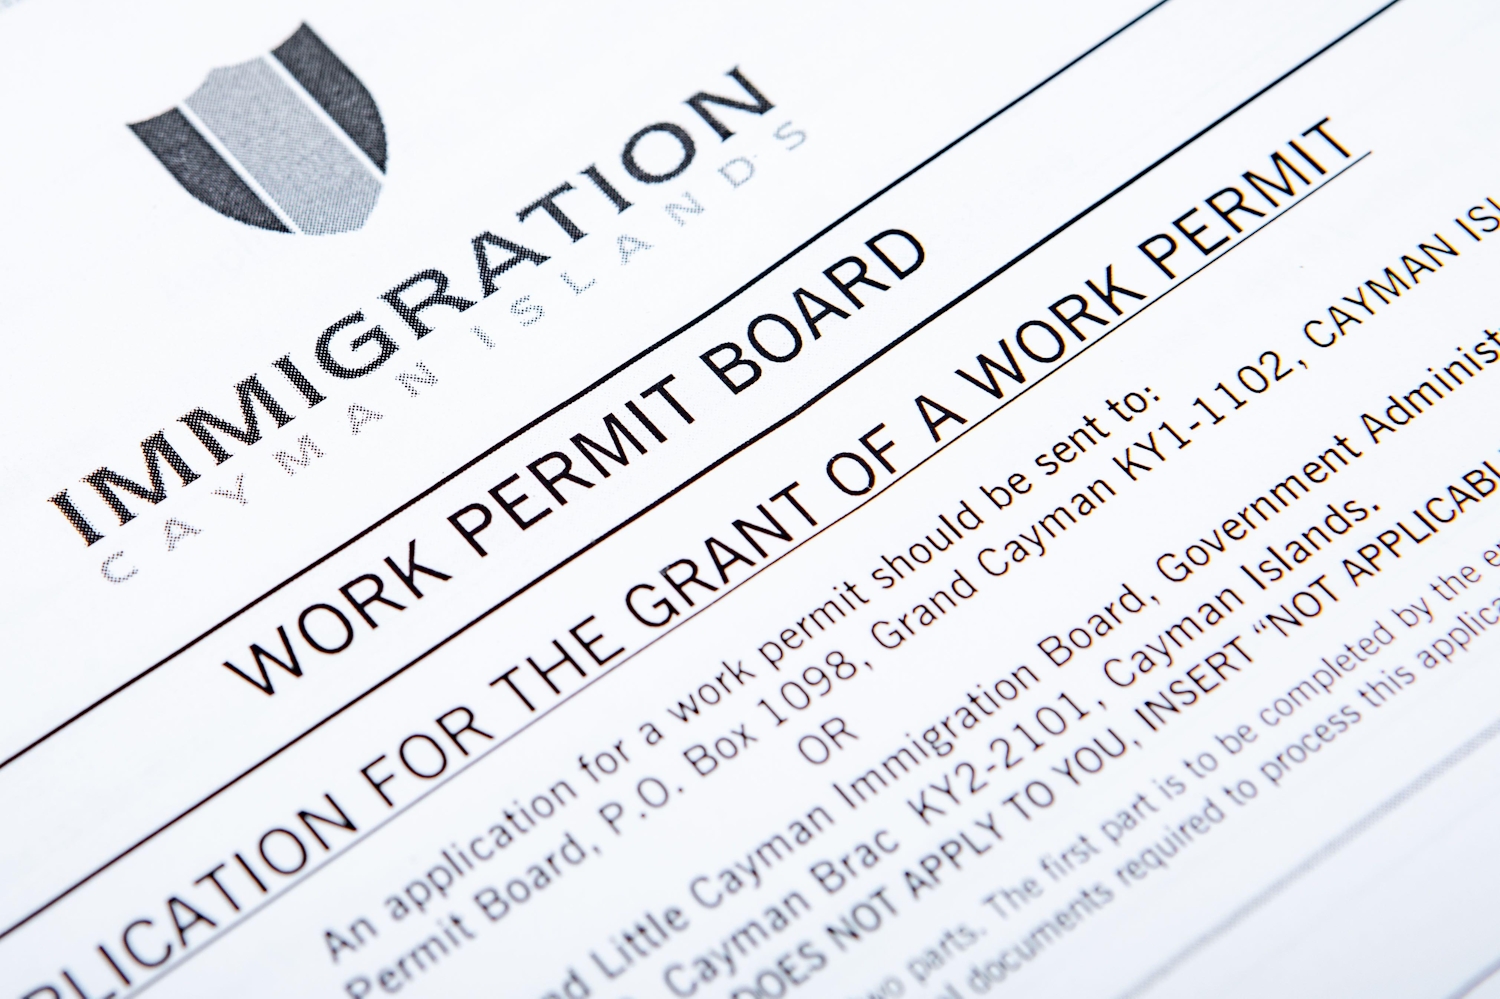 Cayman Islands immigration work permit form